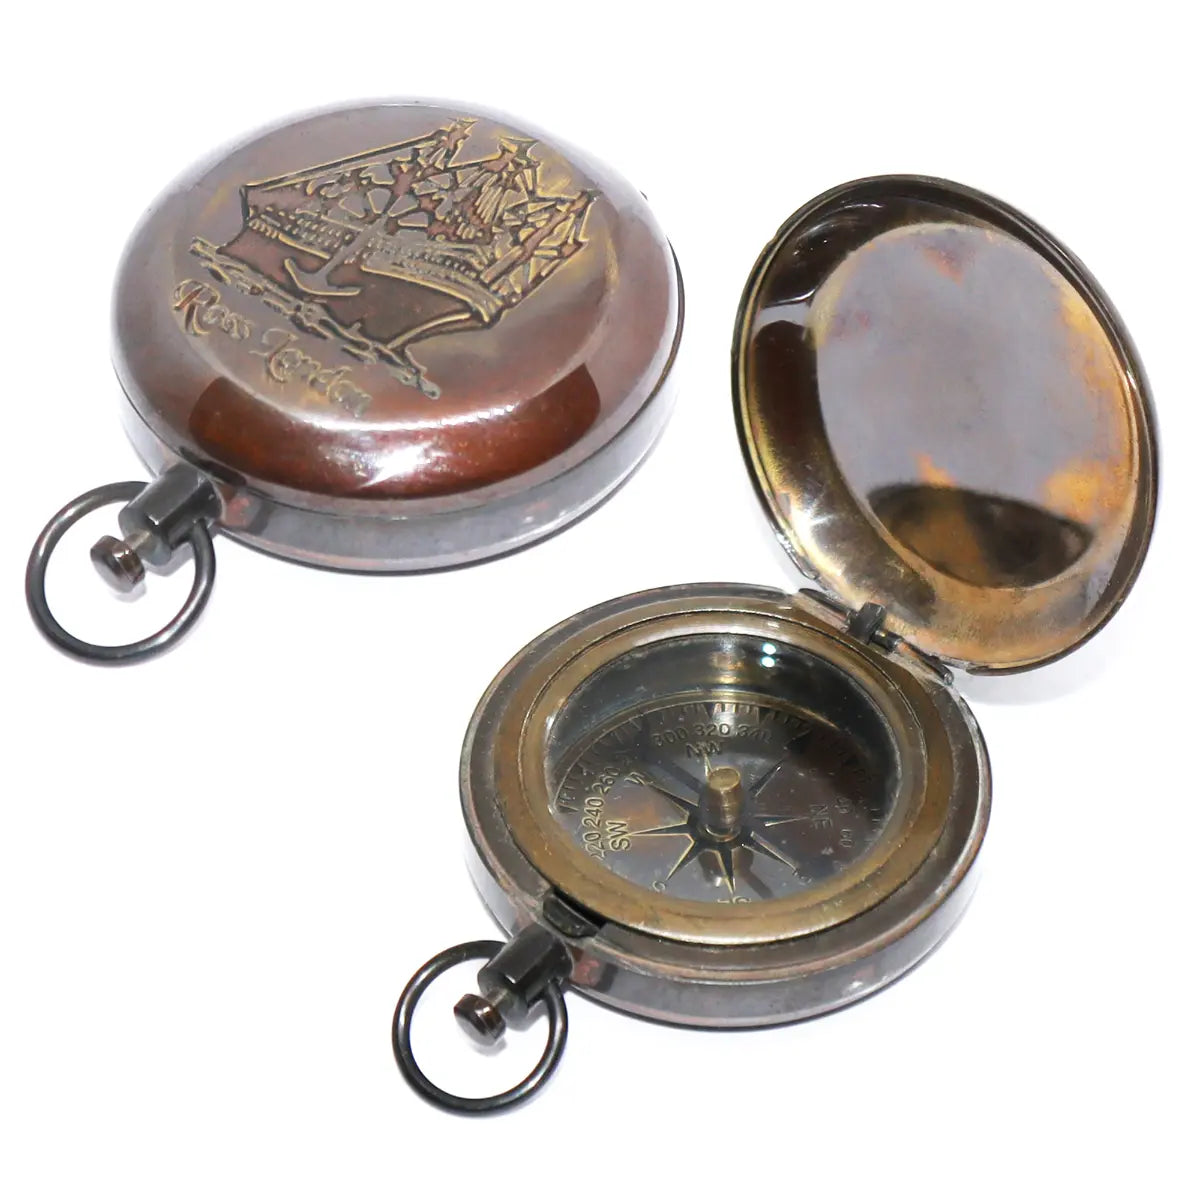 Antique Brass Compass ABC123